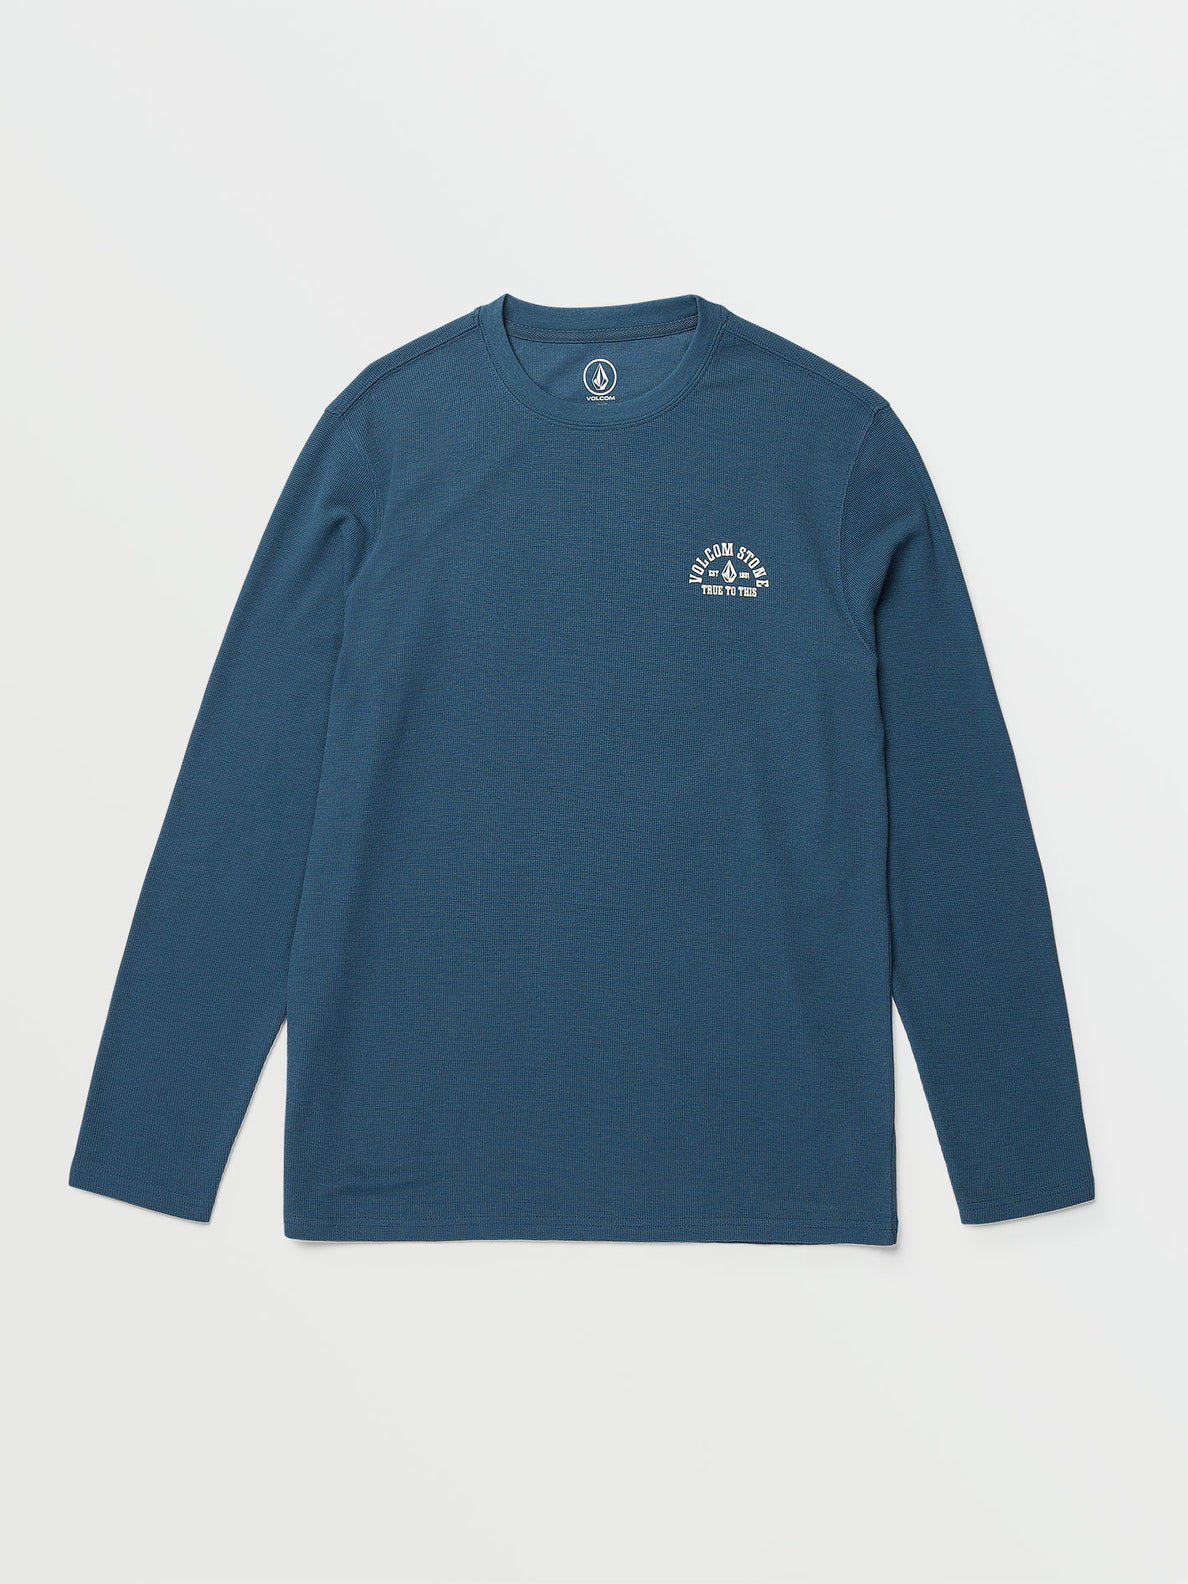 Nunez Graphic Thermal Shirt - Smokey Blue